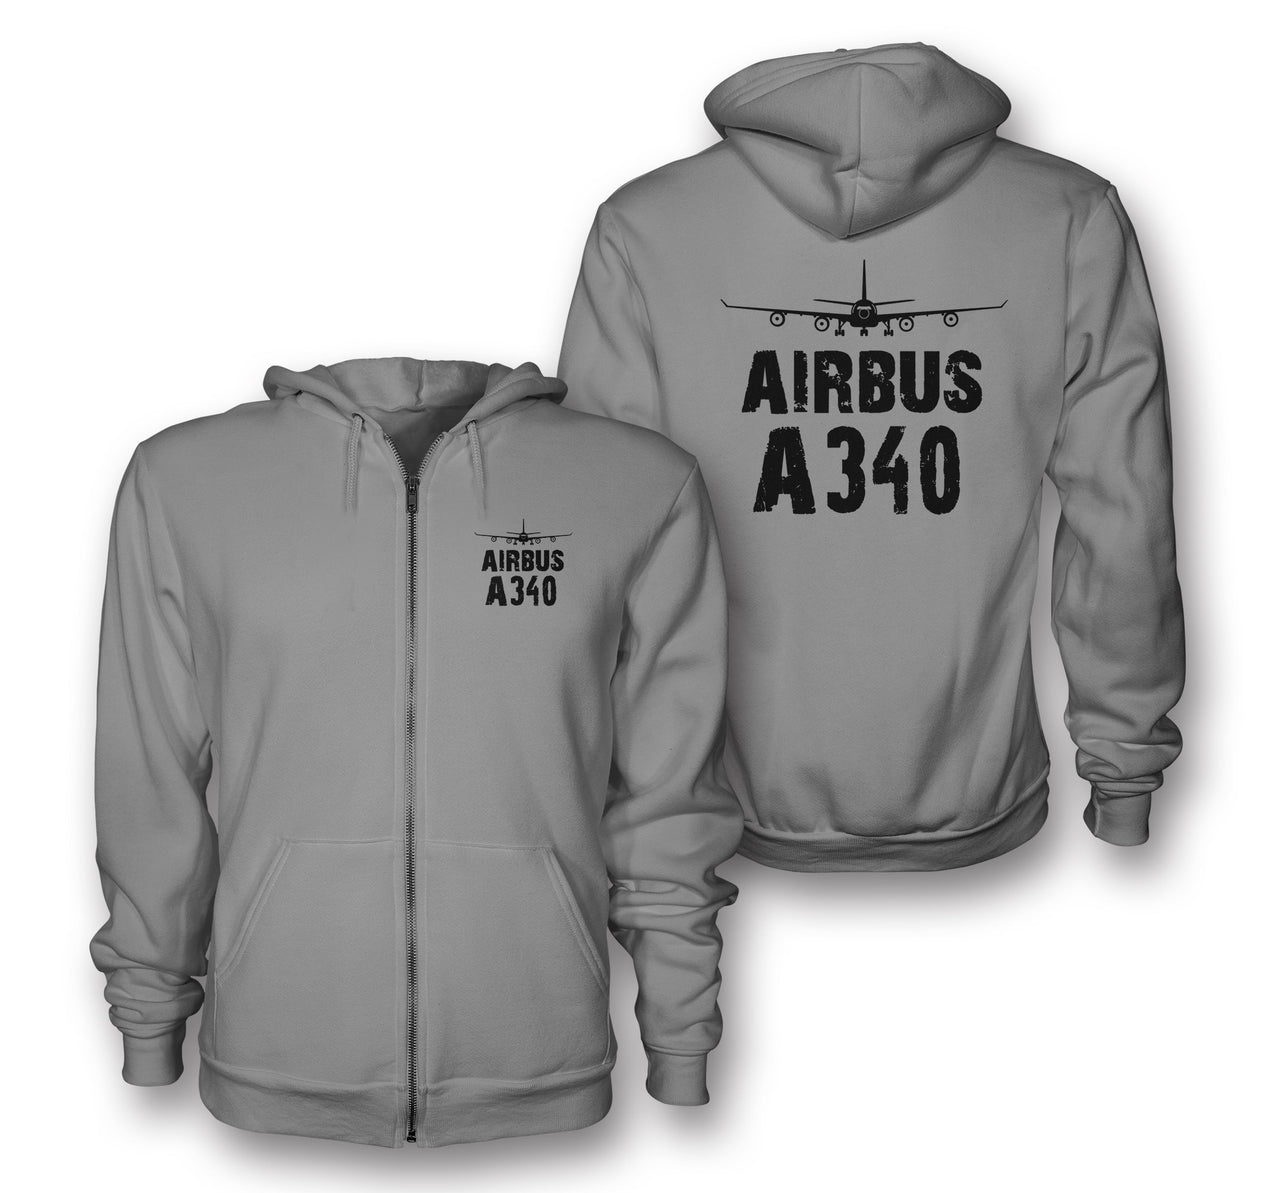 Airbus A340 & Plane Designed Zipped Hoodies